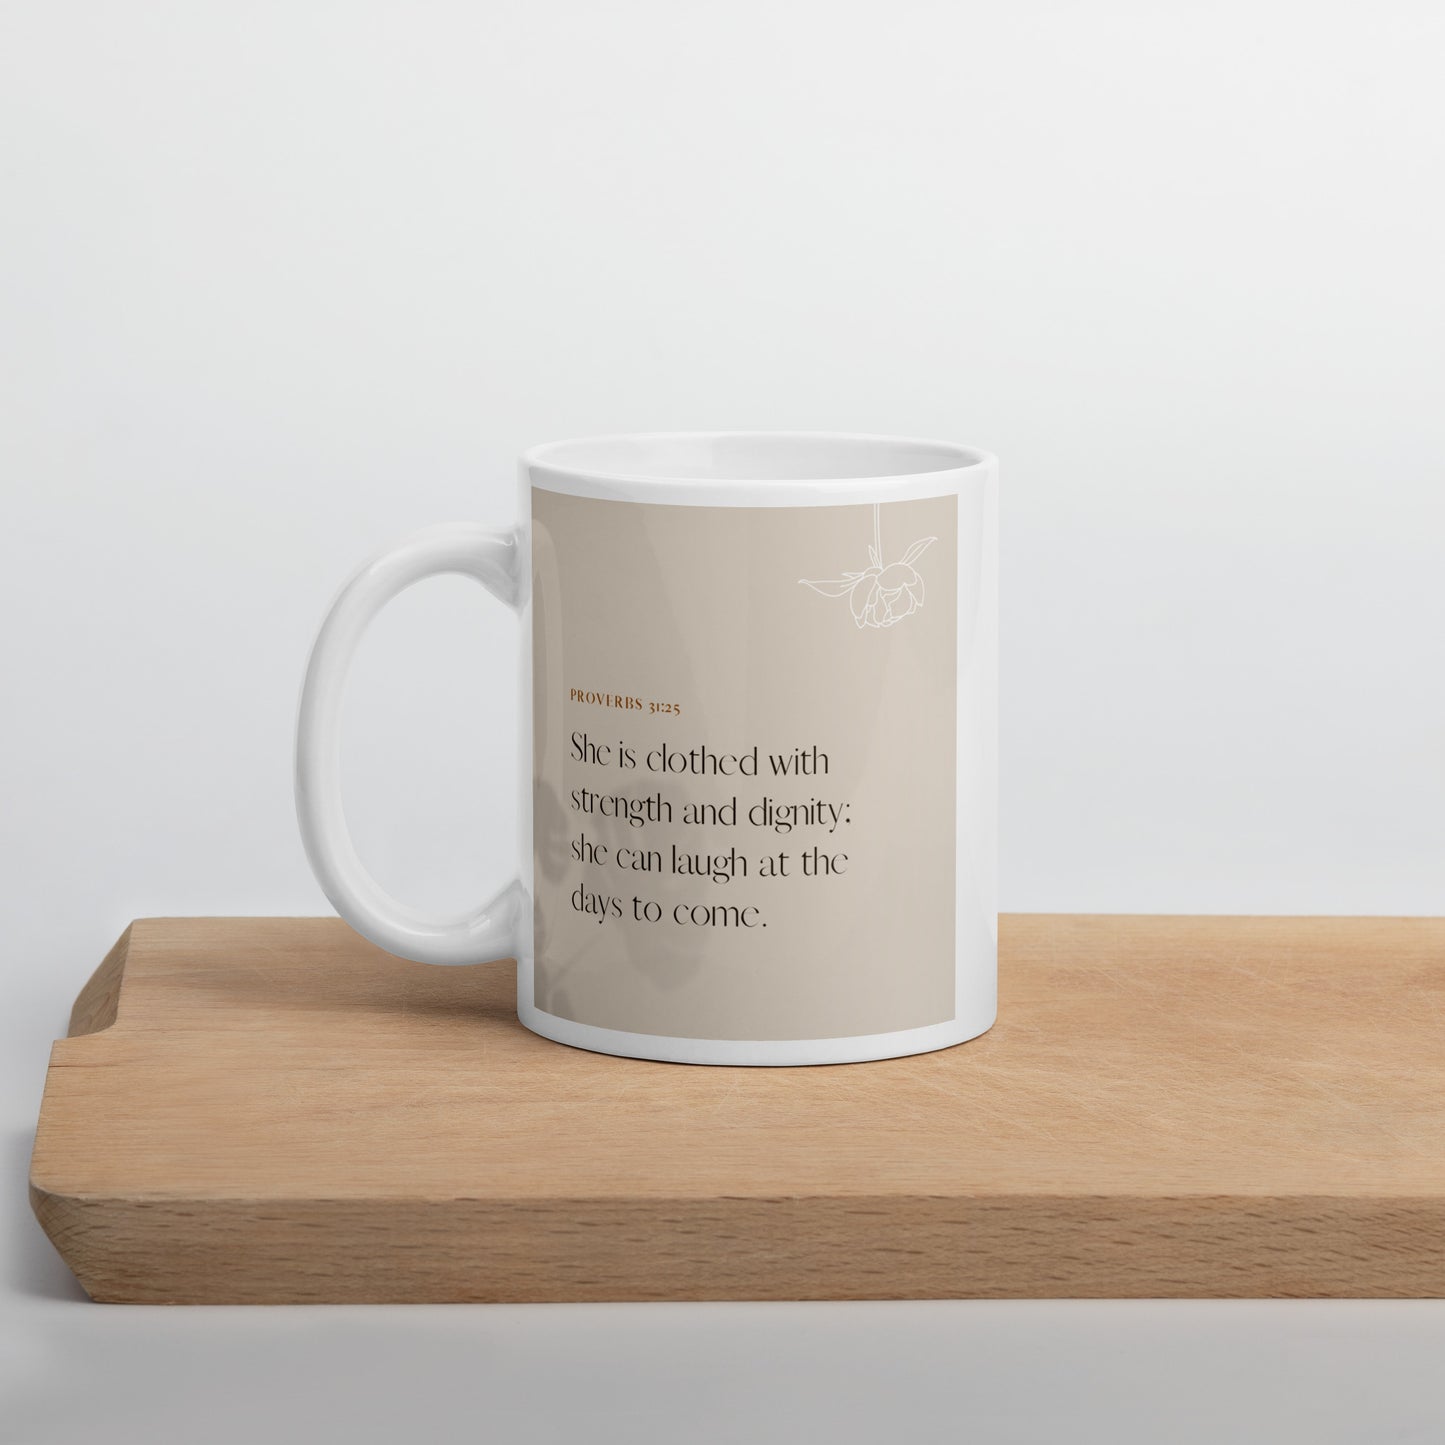 Proverbs 31:25 White glossy mug